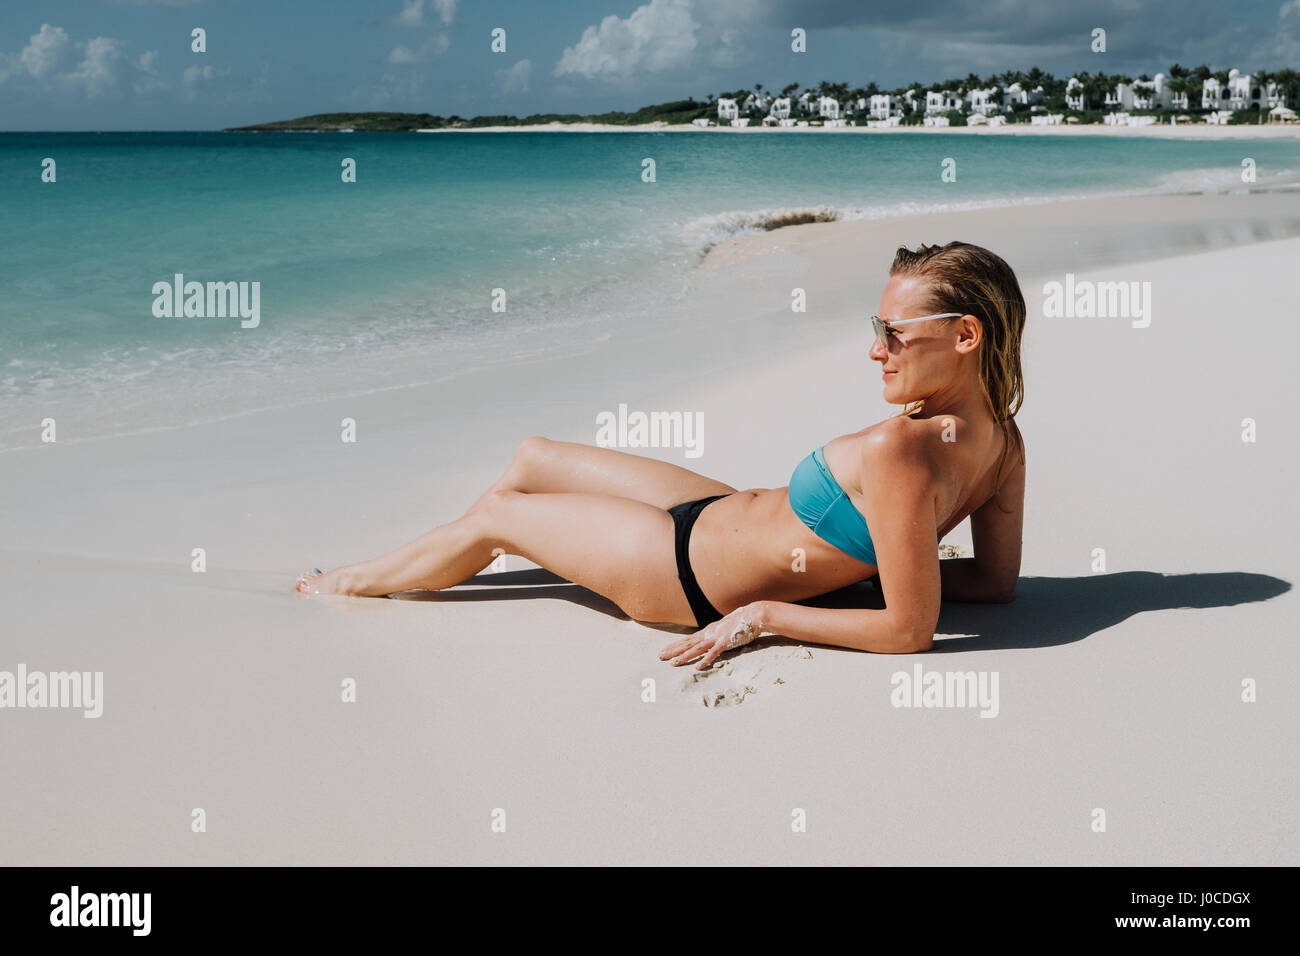 Woman in bikini reclining on beach looking out du blue sea, Anguilla, Saint Martin, Caraïbes Banque D'Images